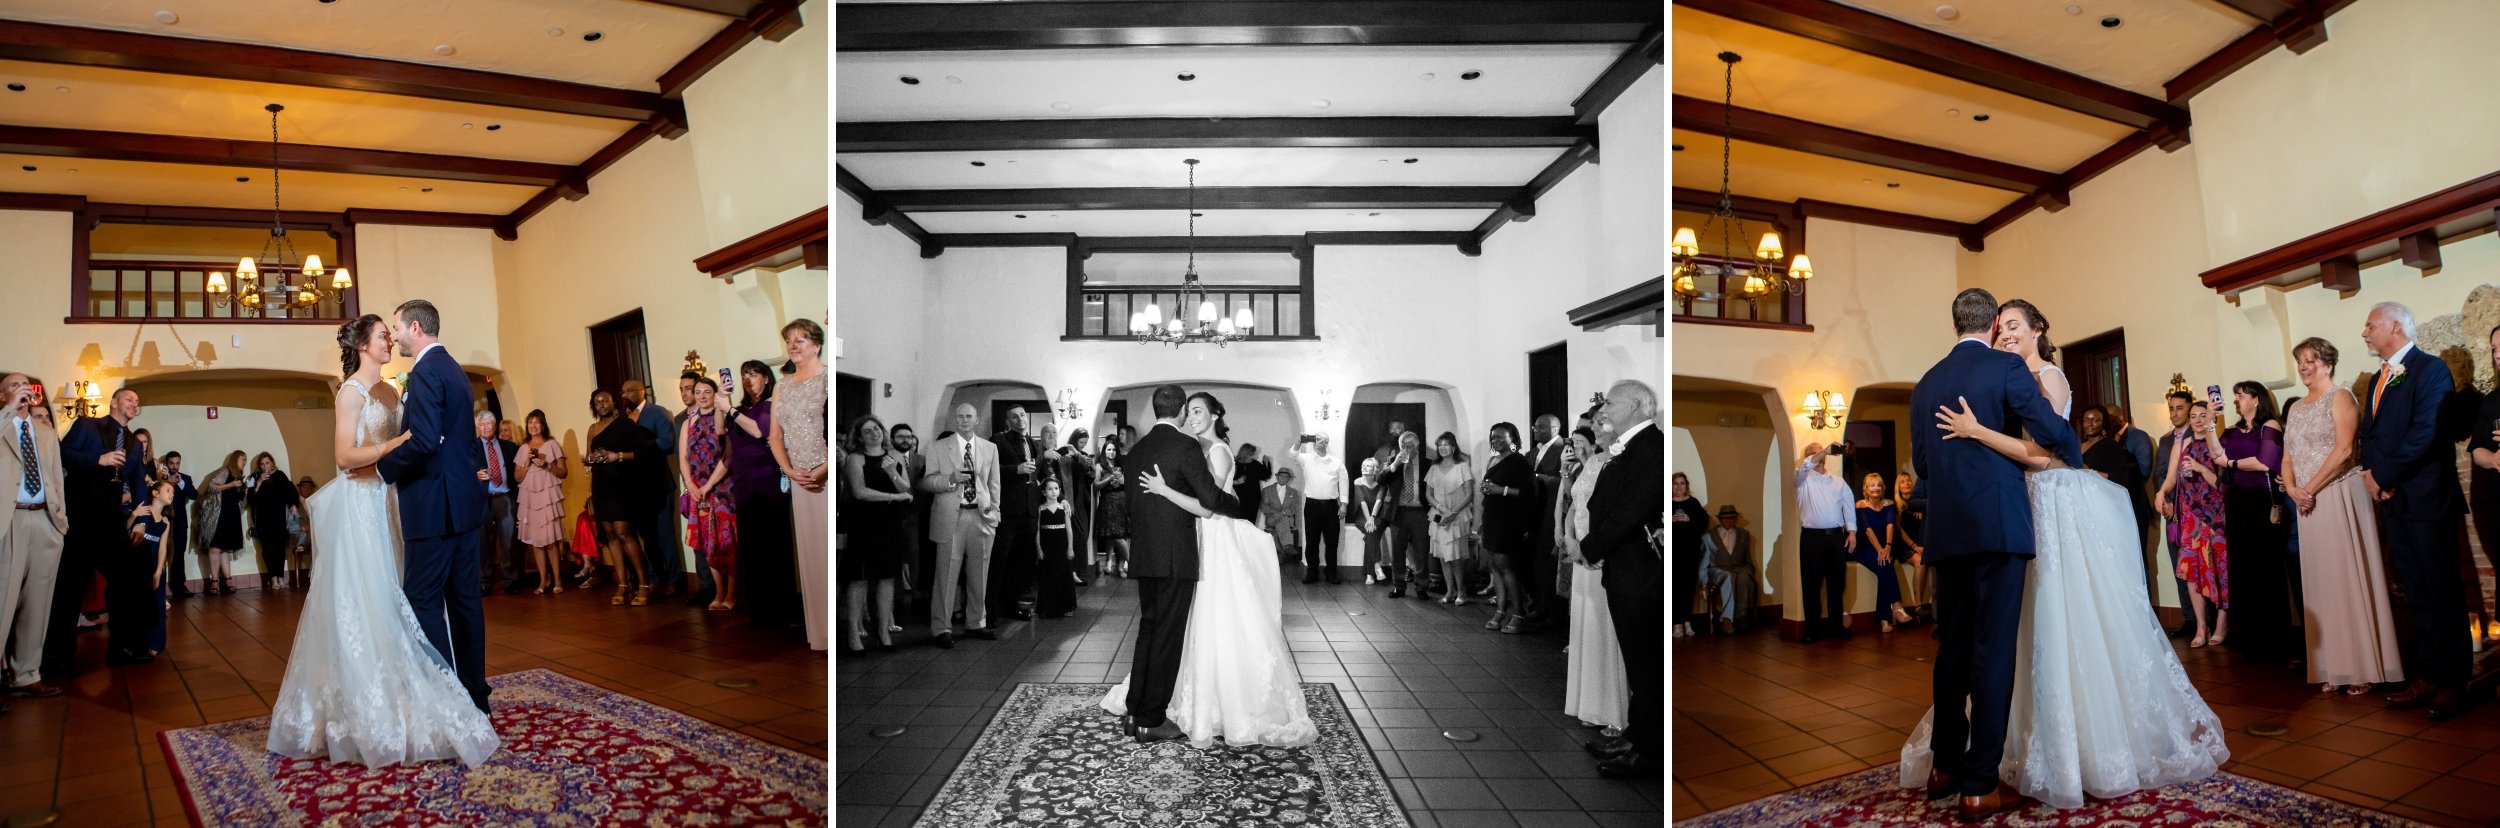 Wedding - Curtiss Mansion - Photography by Santy Martinez 21.jpg